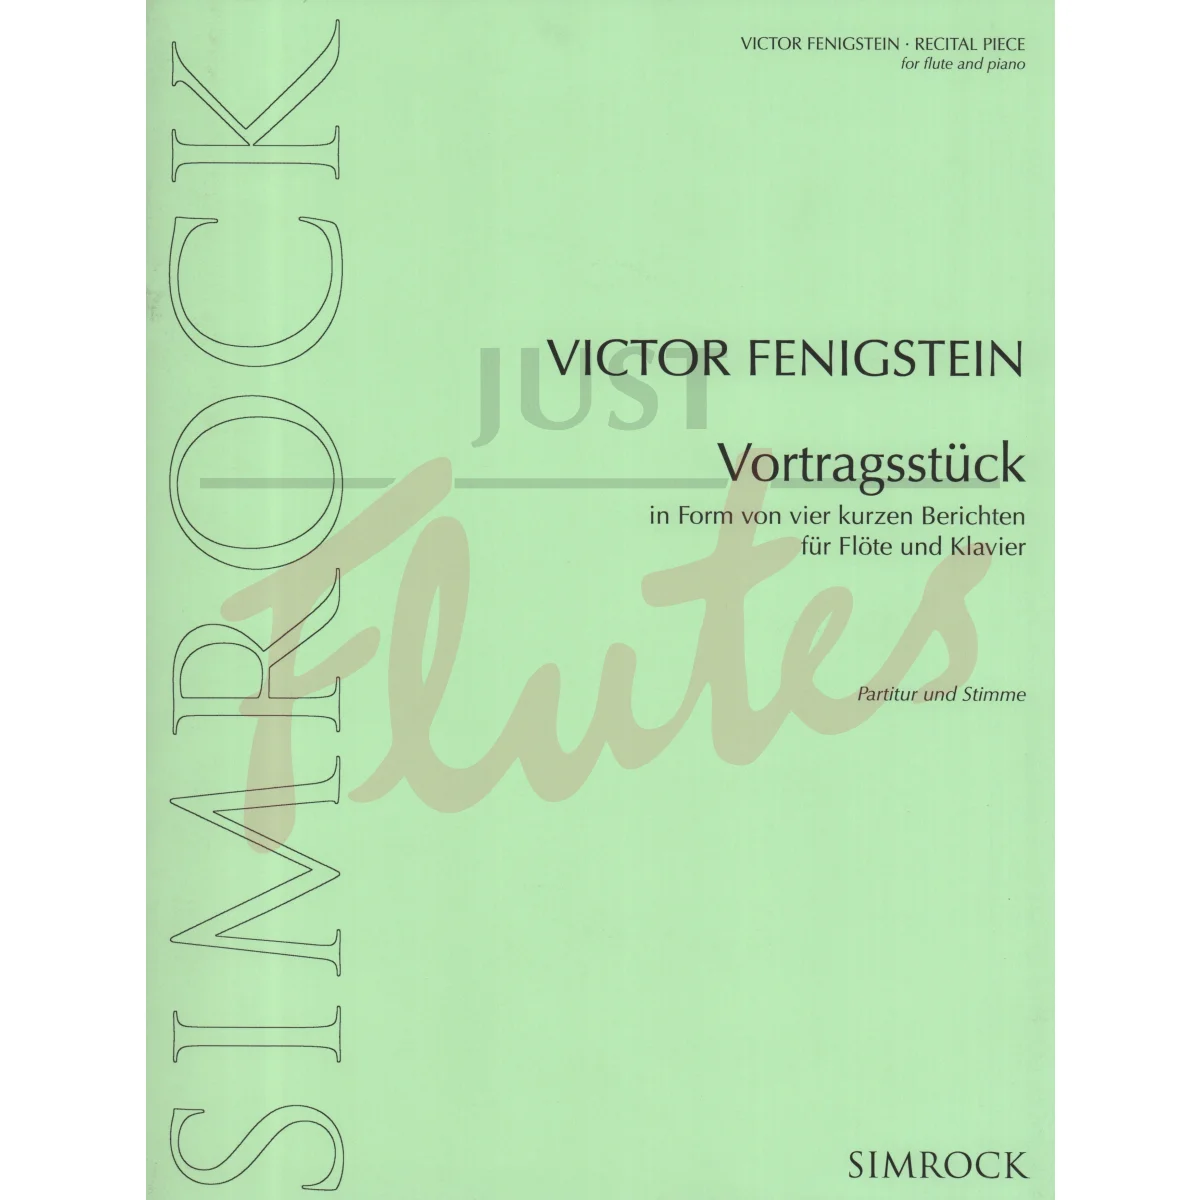 Vortragsstück for Flute and Piano